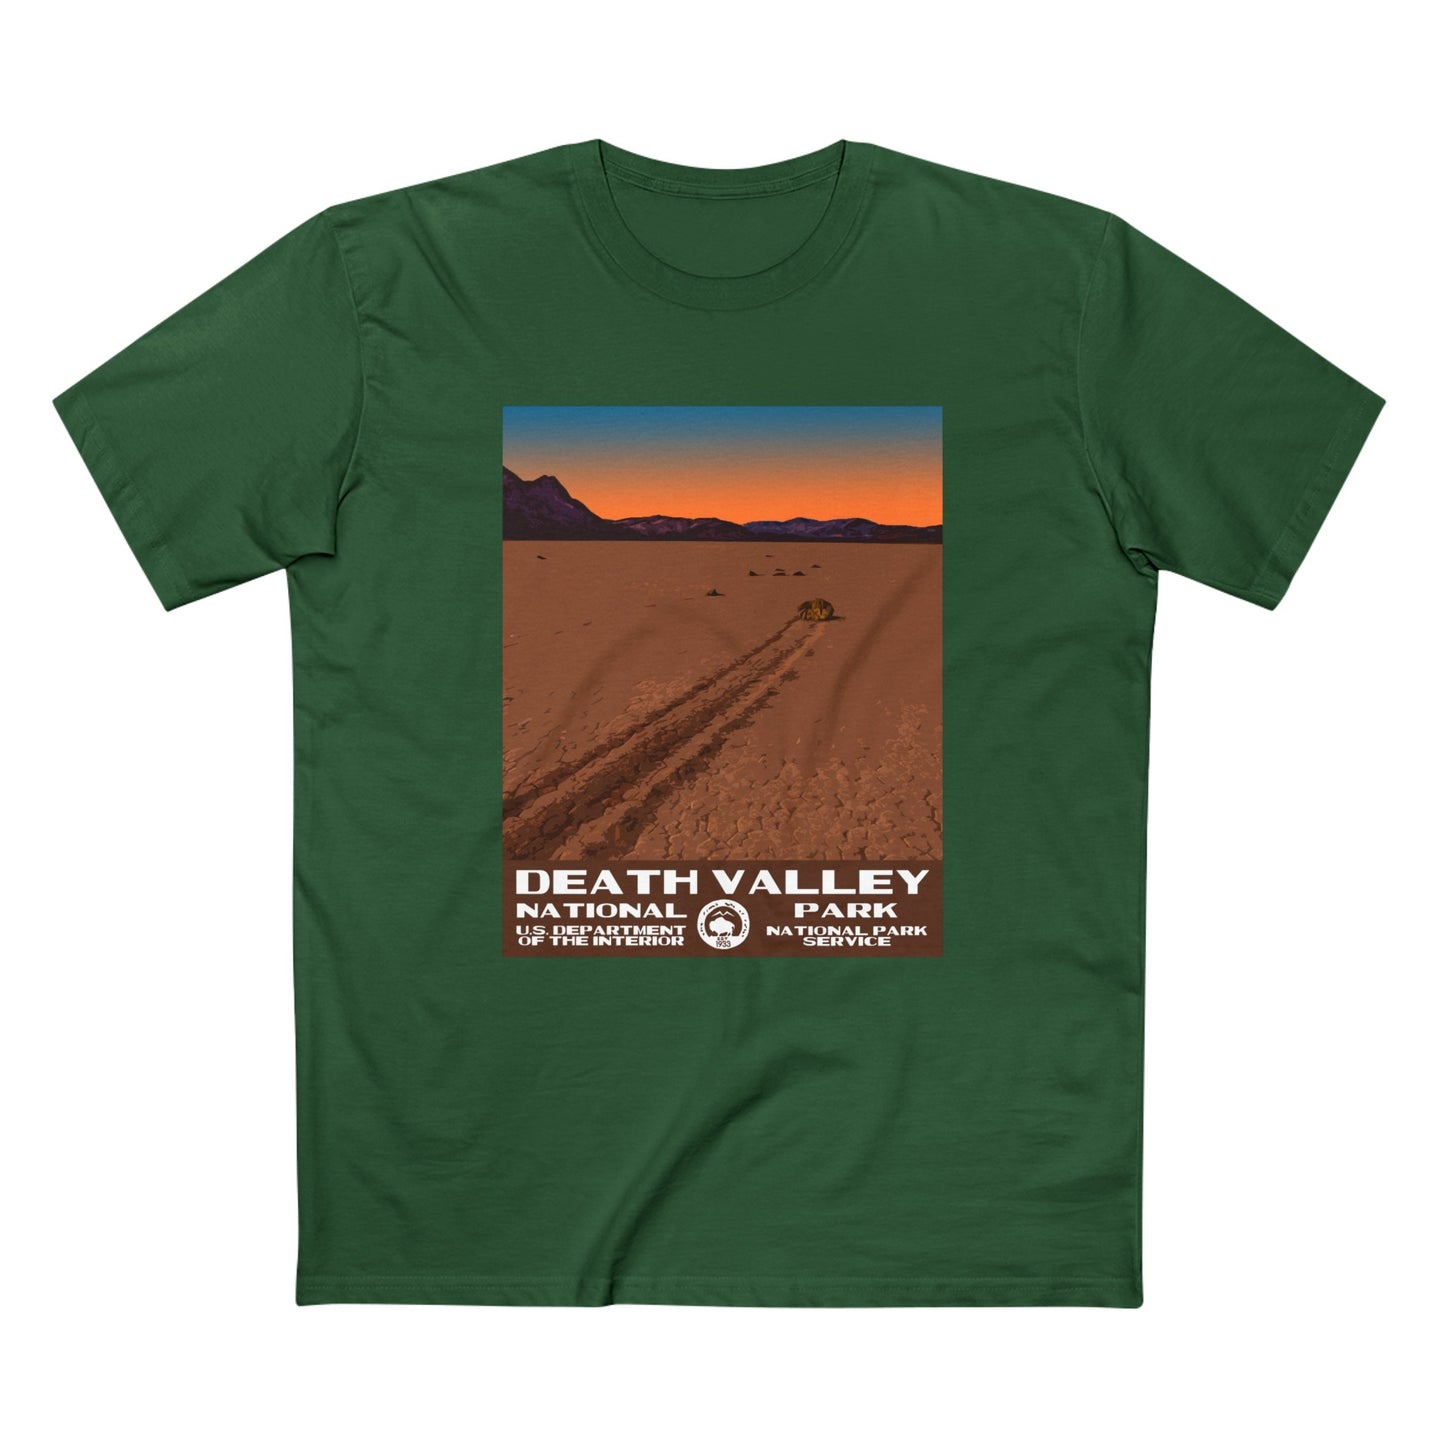 Death Valley National Park T-Shirt - Racetrack Playa